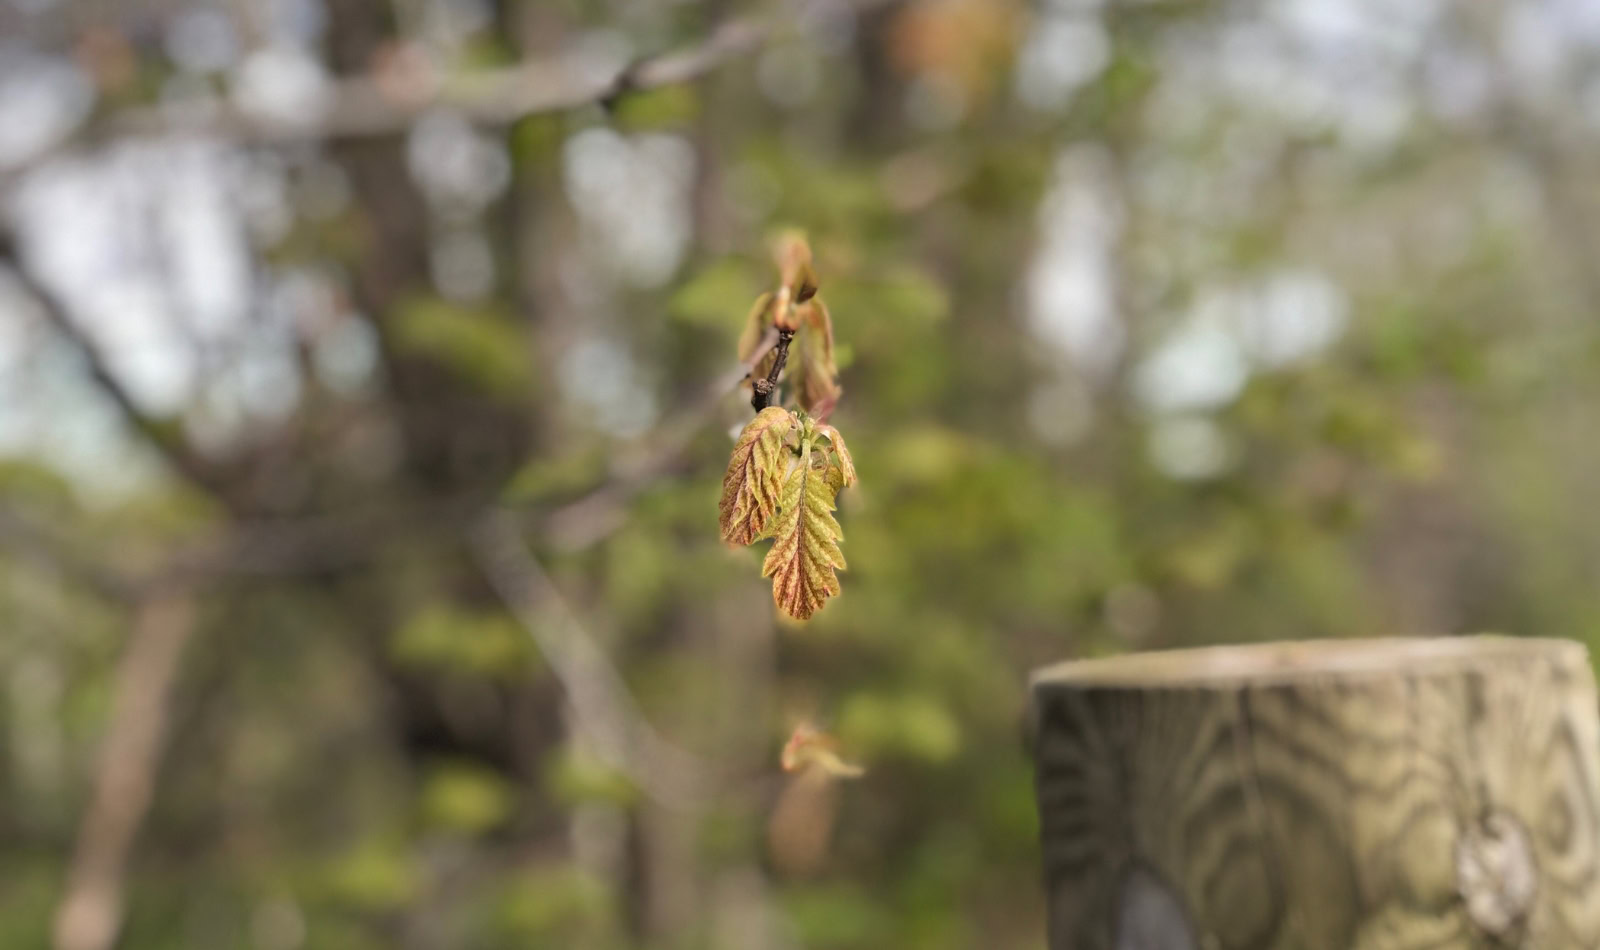 Little oak leaves emerging in the spring